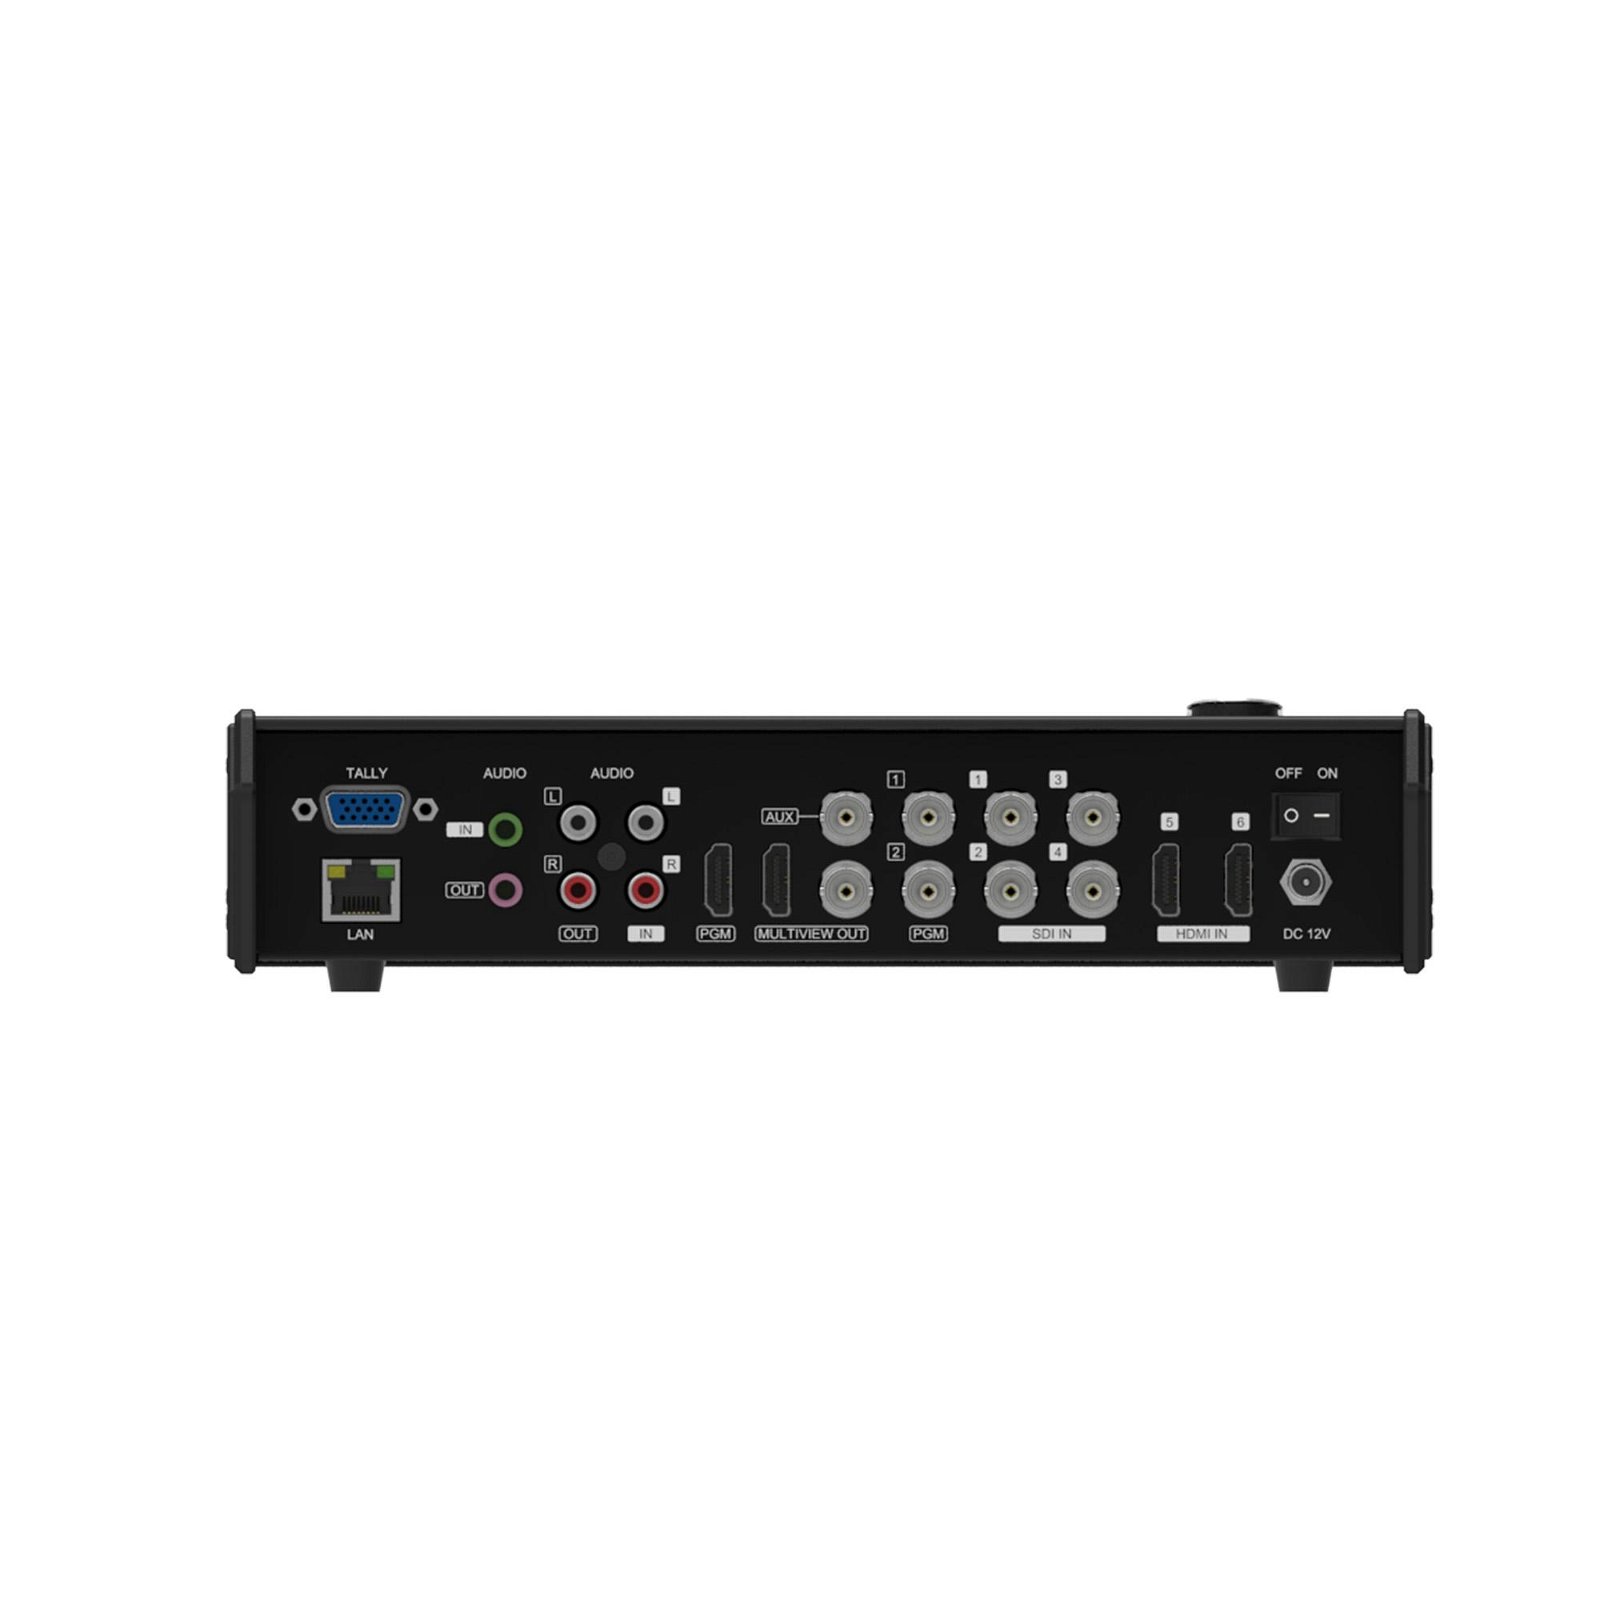 AVMATRIX mini 6 Channel Multi-format Video Switcher 4